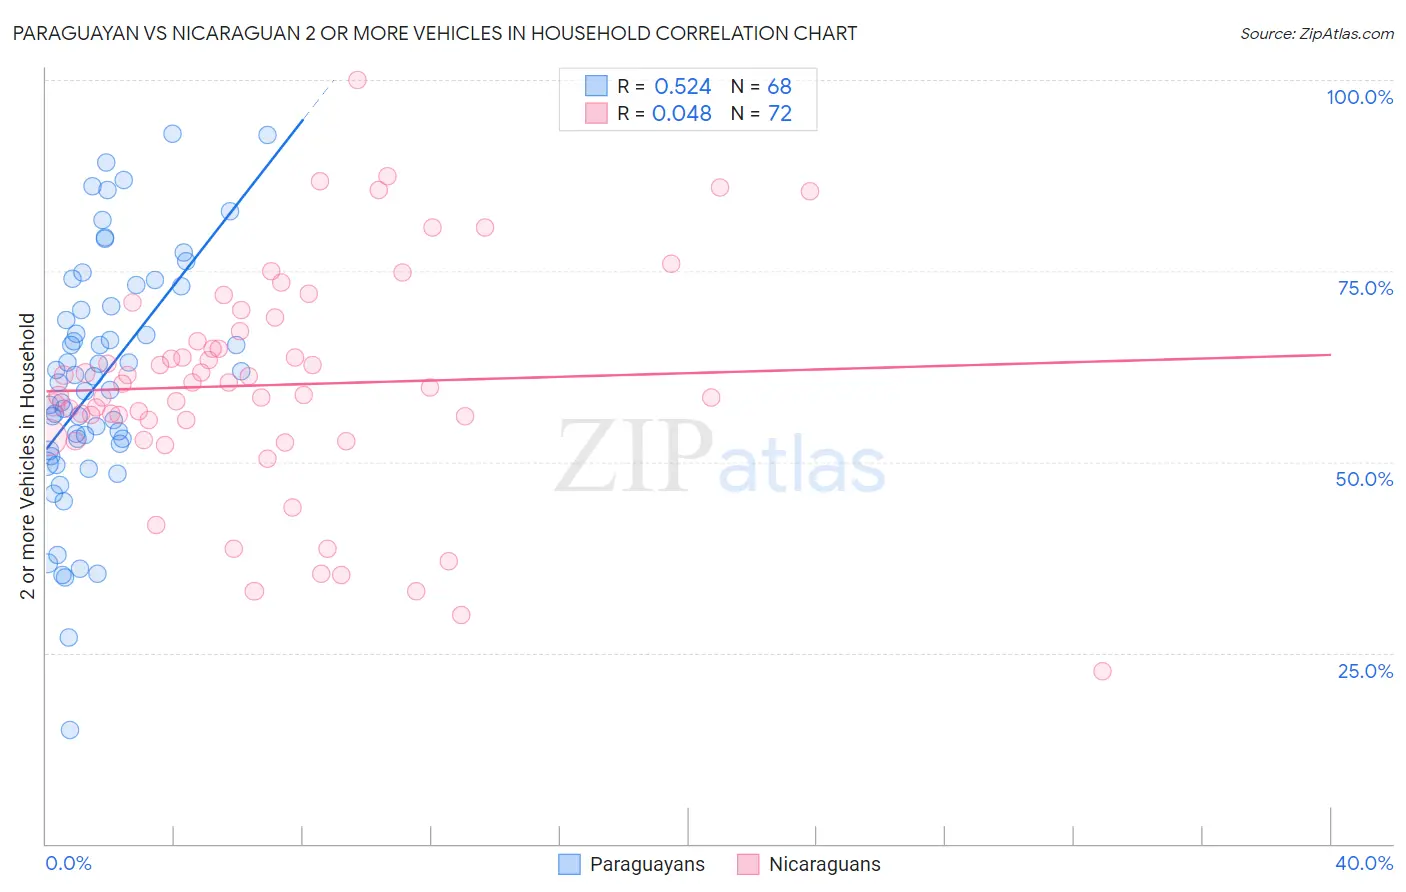 Paraguayan vs Nicaraguan 2 or more Vehicles in Household